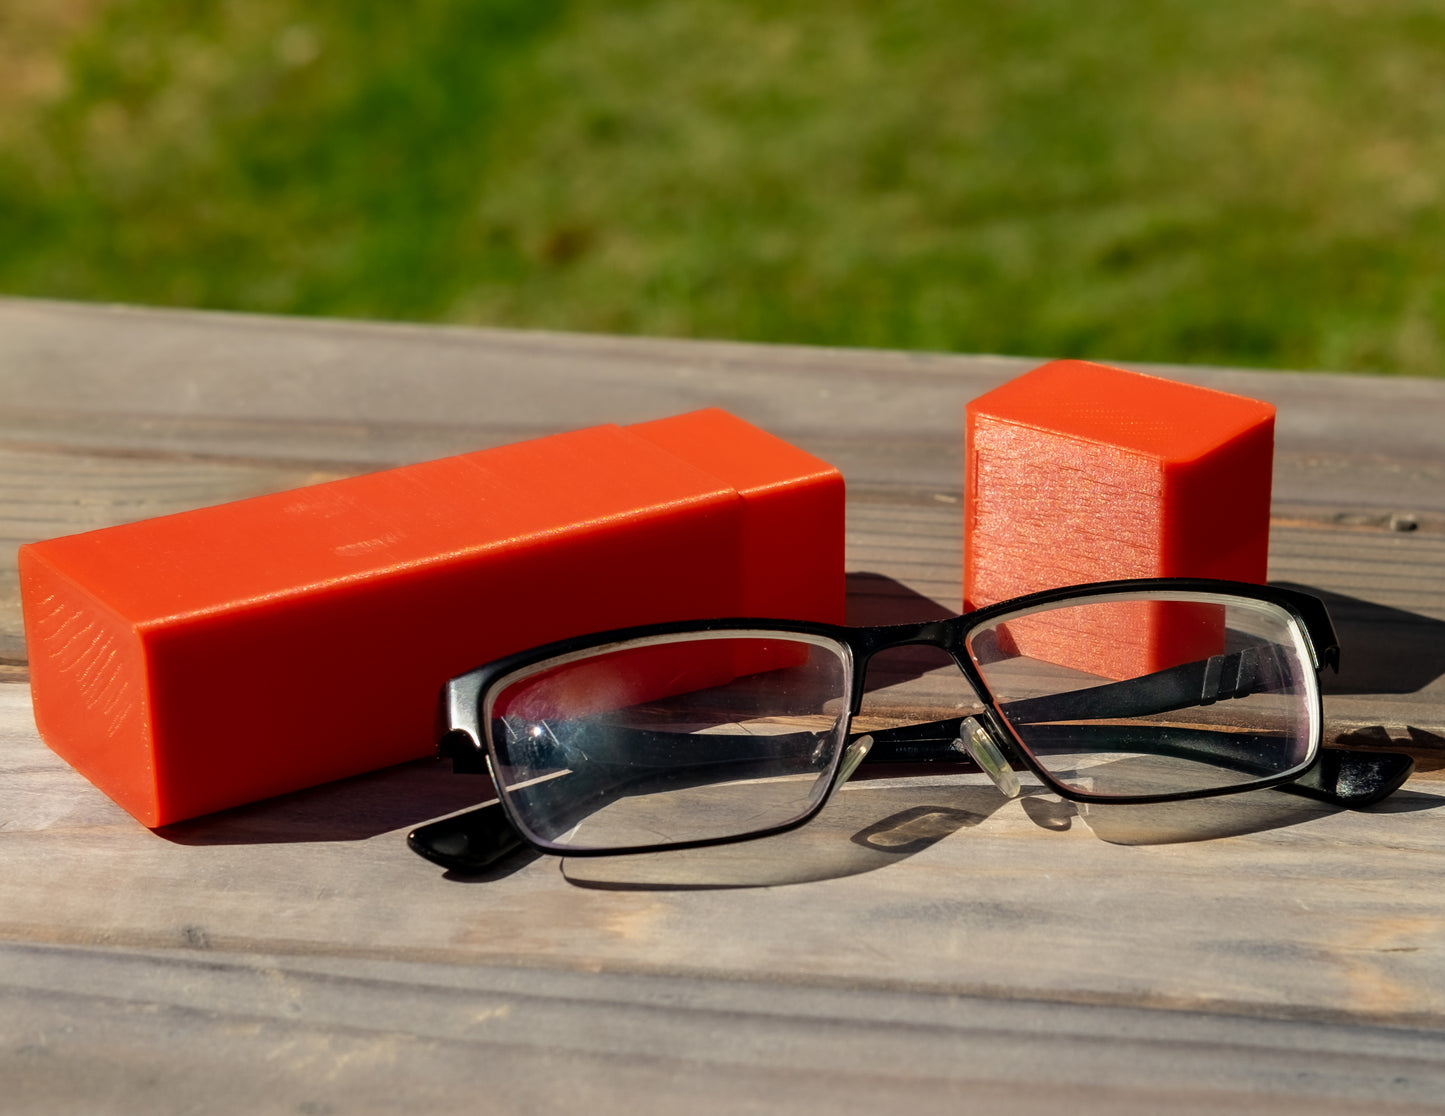 3D Printed Glasses Case